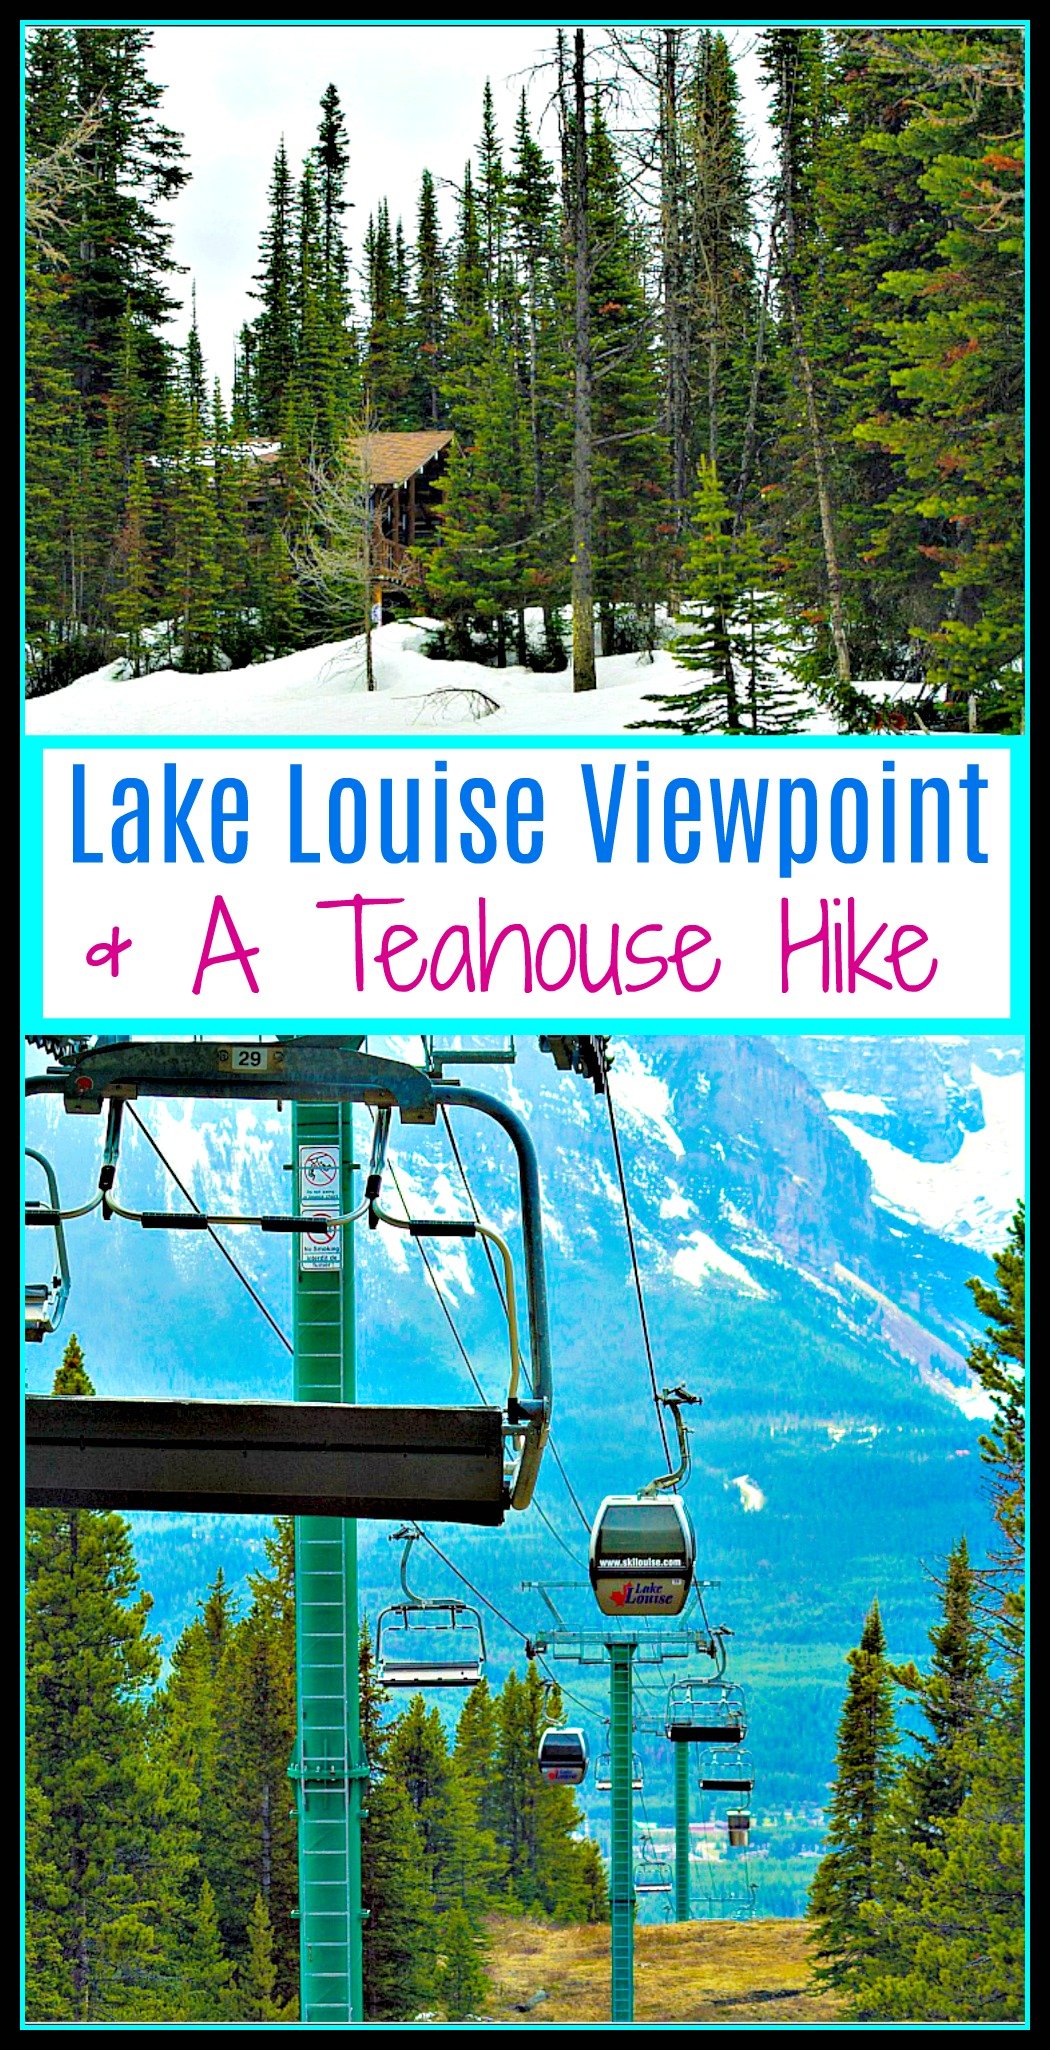 Lake Louise Viewpoint and a Teahouse Hike